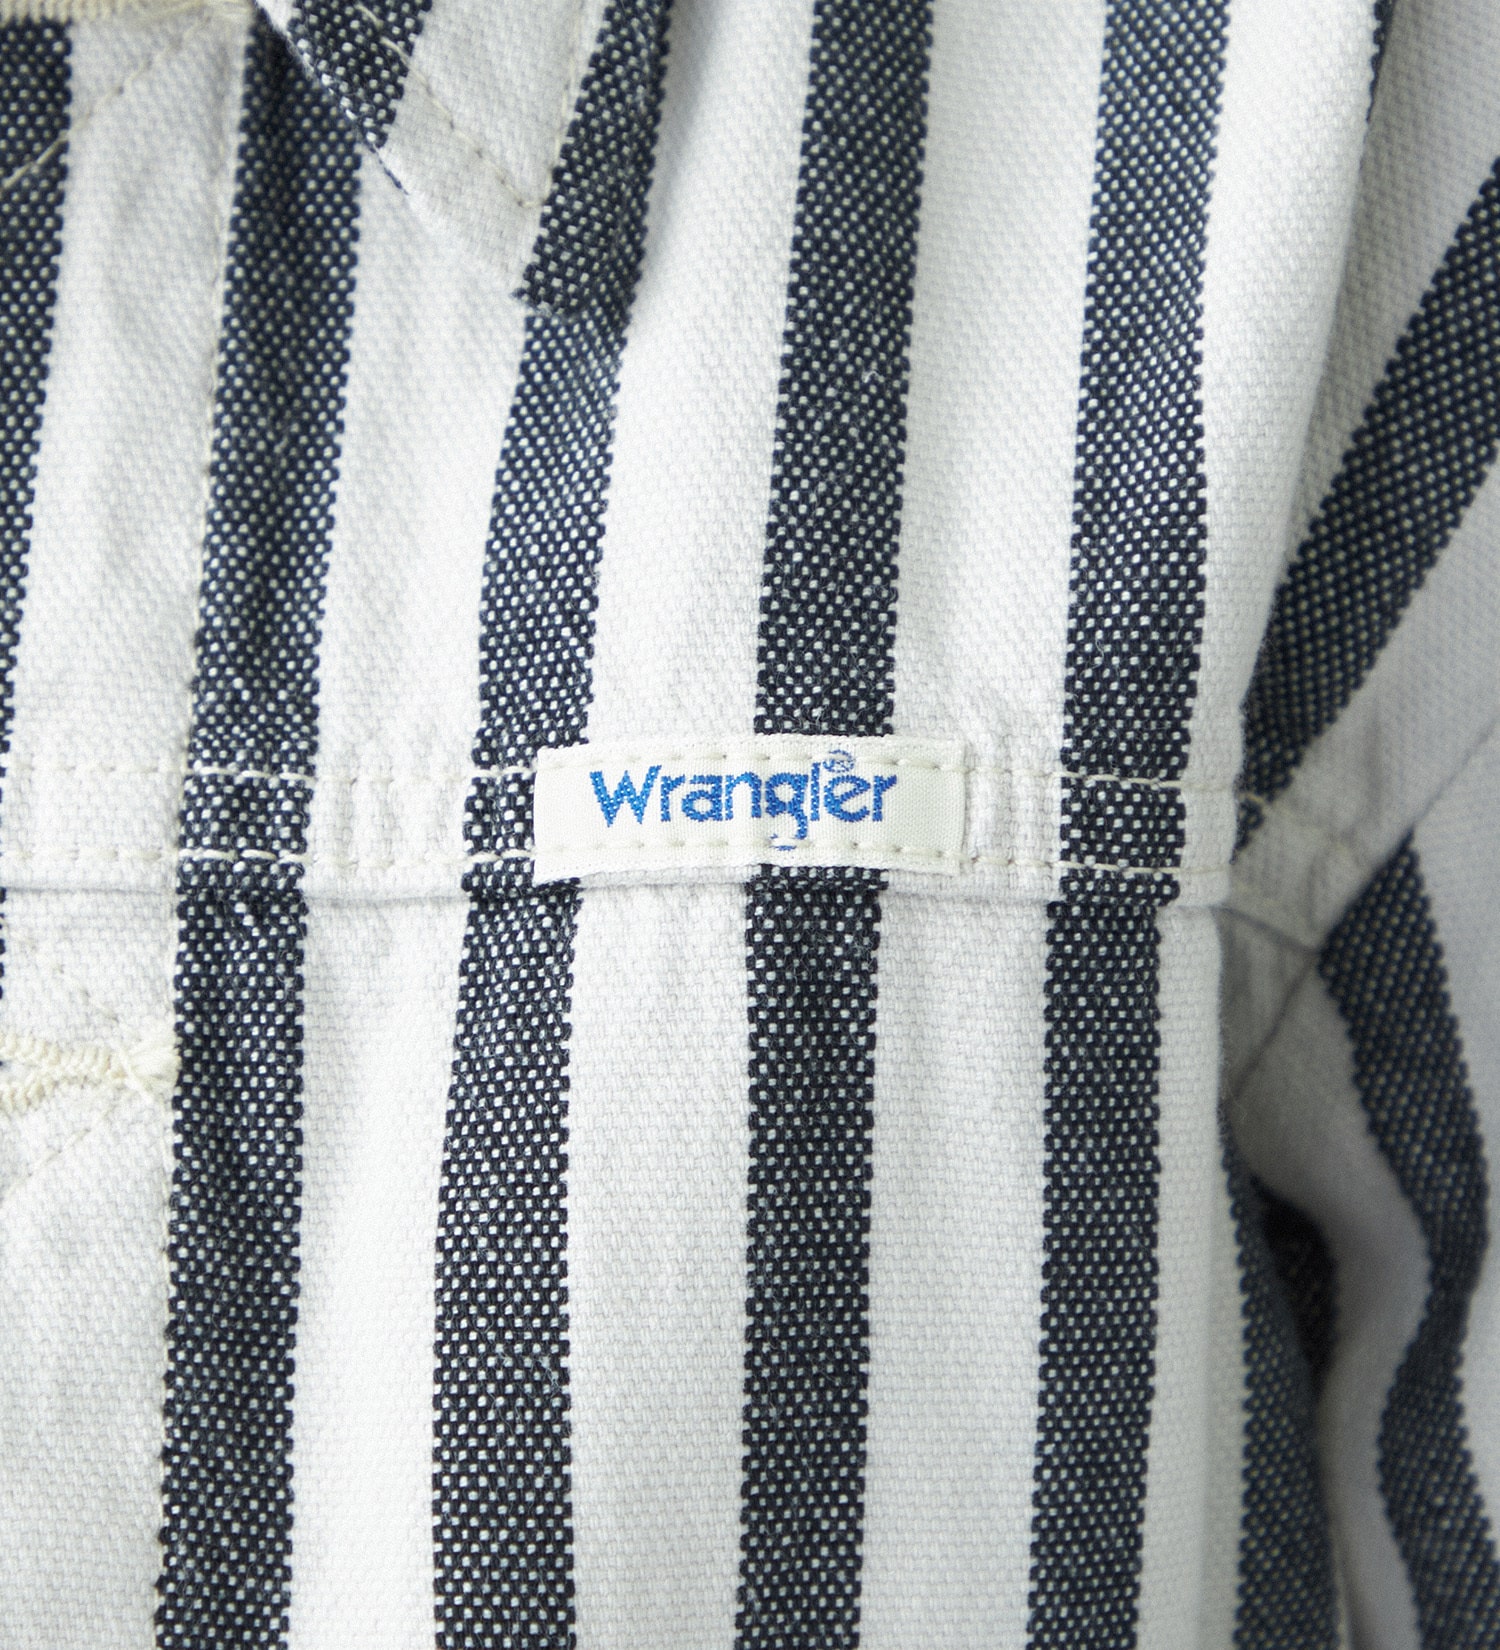 Wrangler(ラングラー)のコンパクト ジャケット|ジャケット/アウター/その他アウター/レディース|ブラック